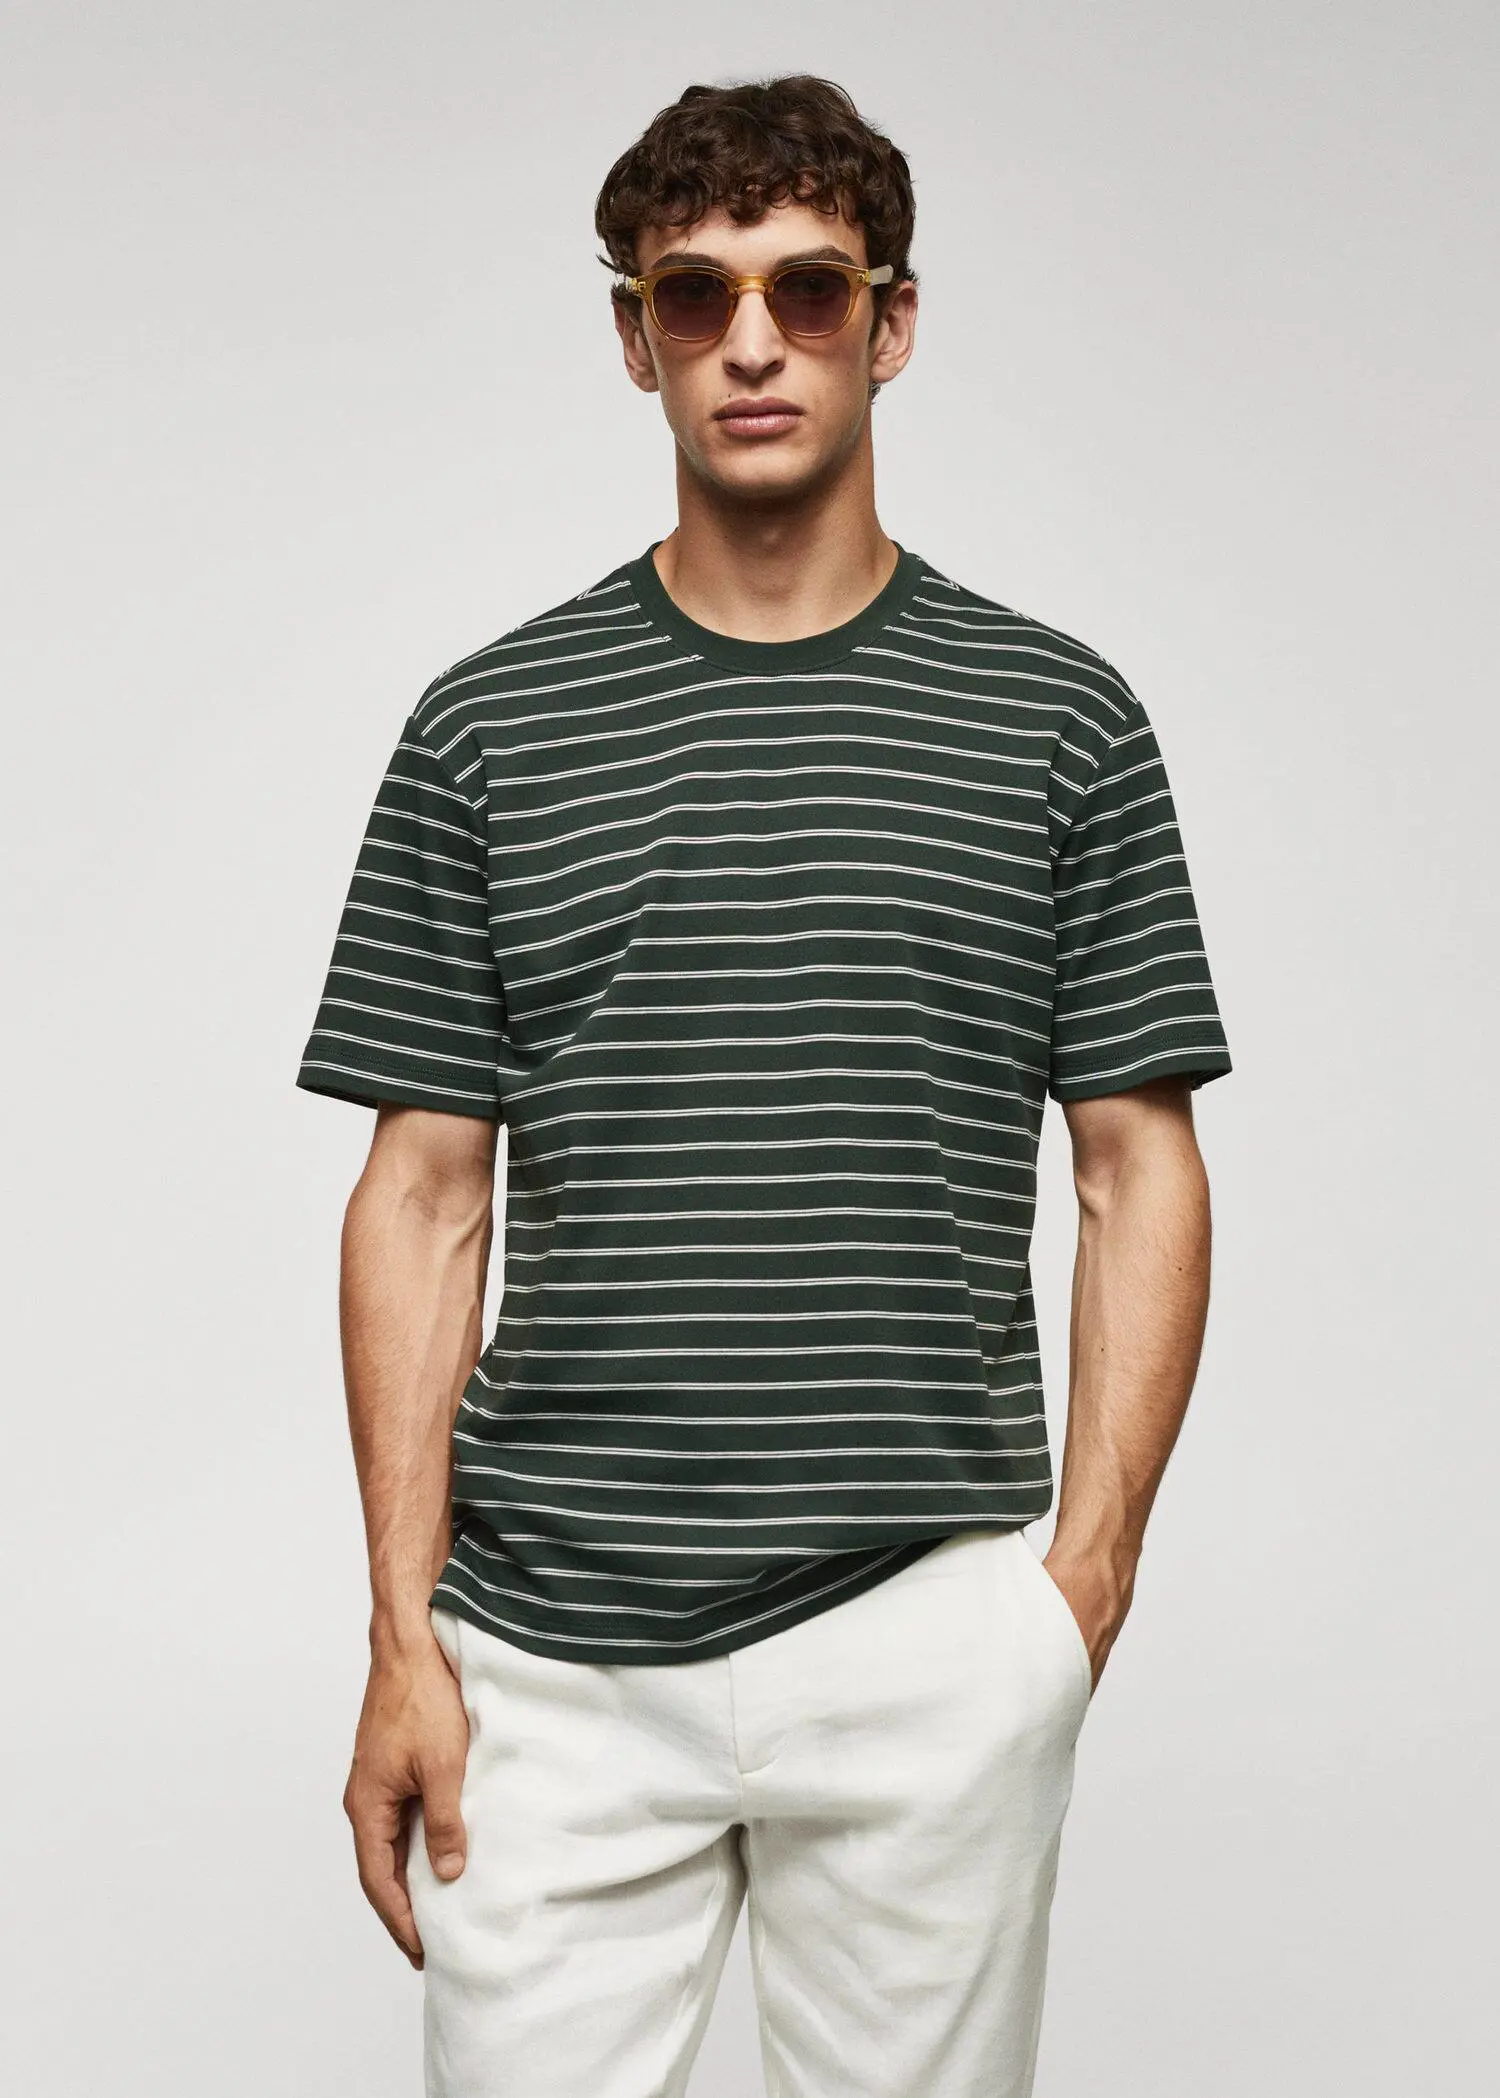 Mango Striped 100% cotton t-shirt. a man wearing a striped shirt and sunglasses. 